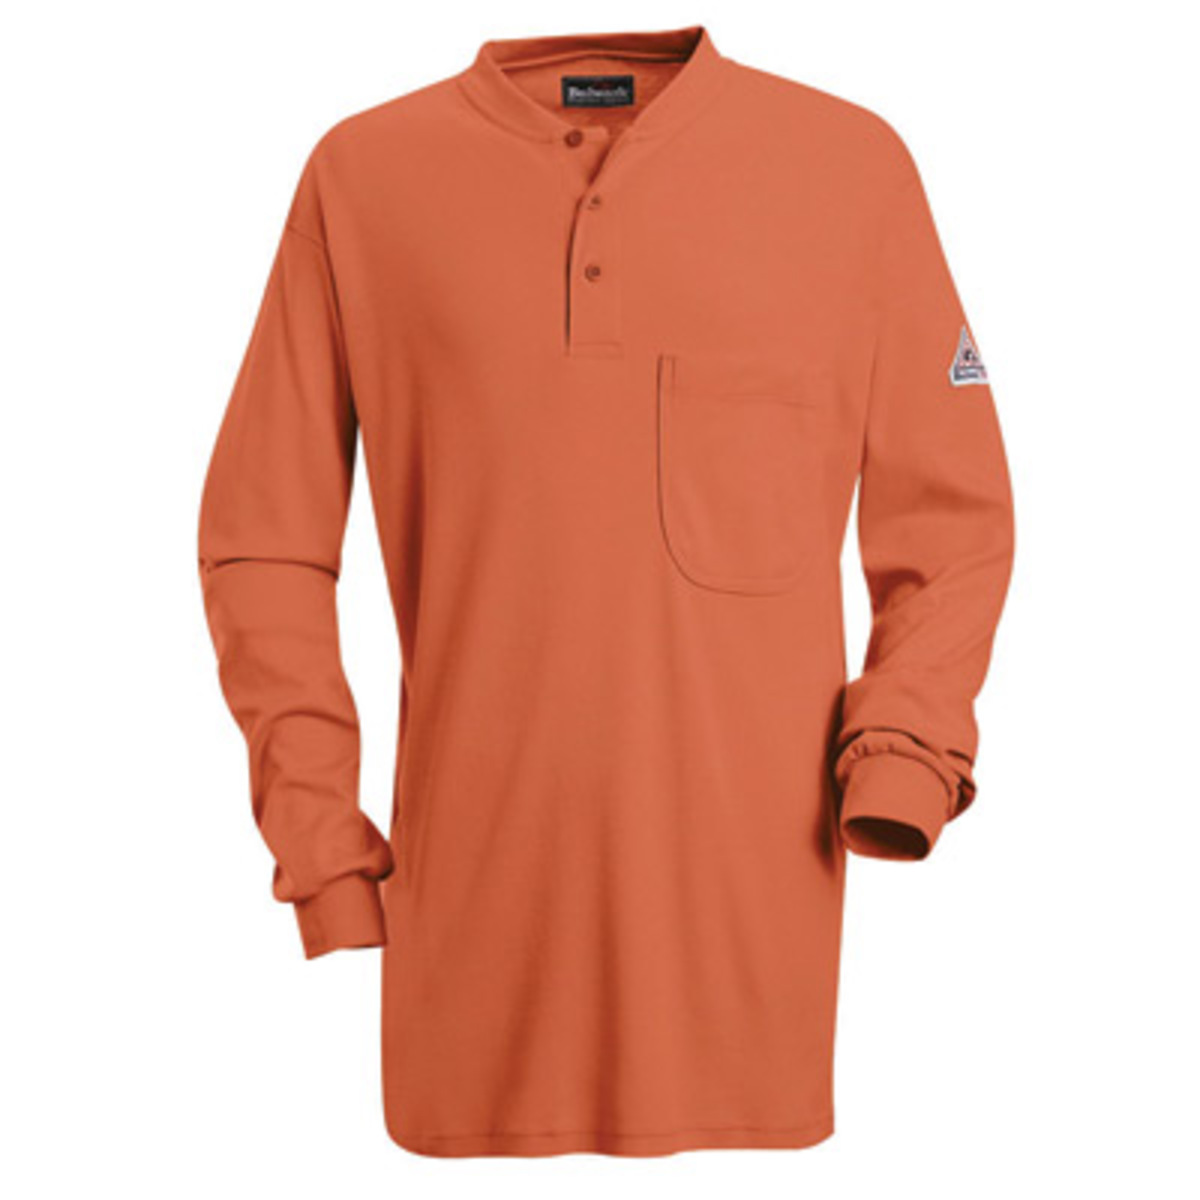 Bulwark® 3X Regular Orange EXCEL FR® Interlock FR Cotton Flame Resistant Henley Shirt With Button Front Closure